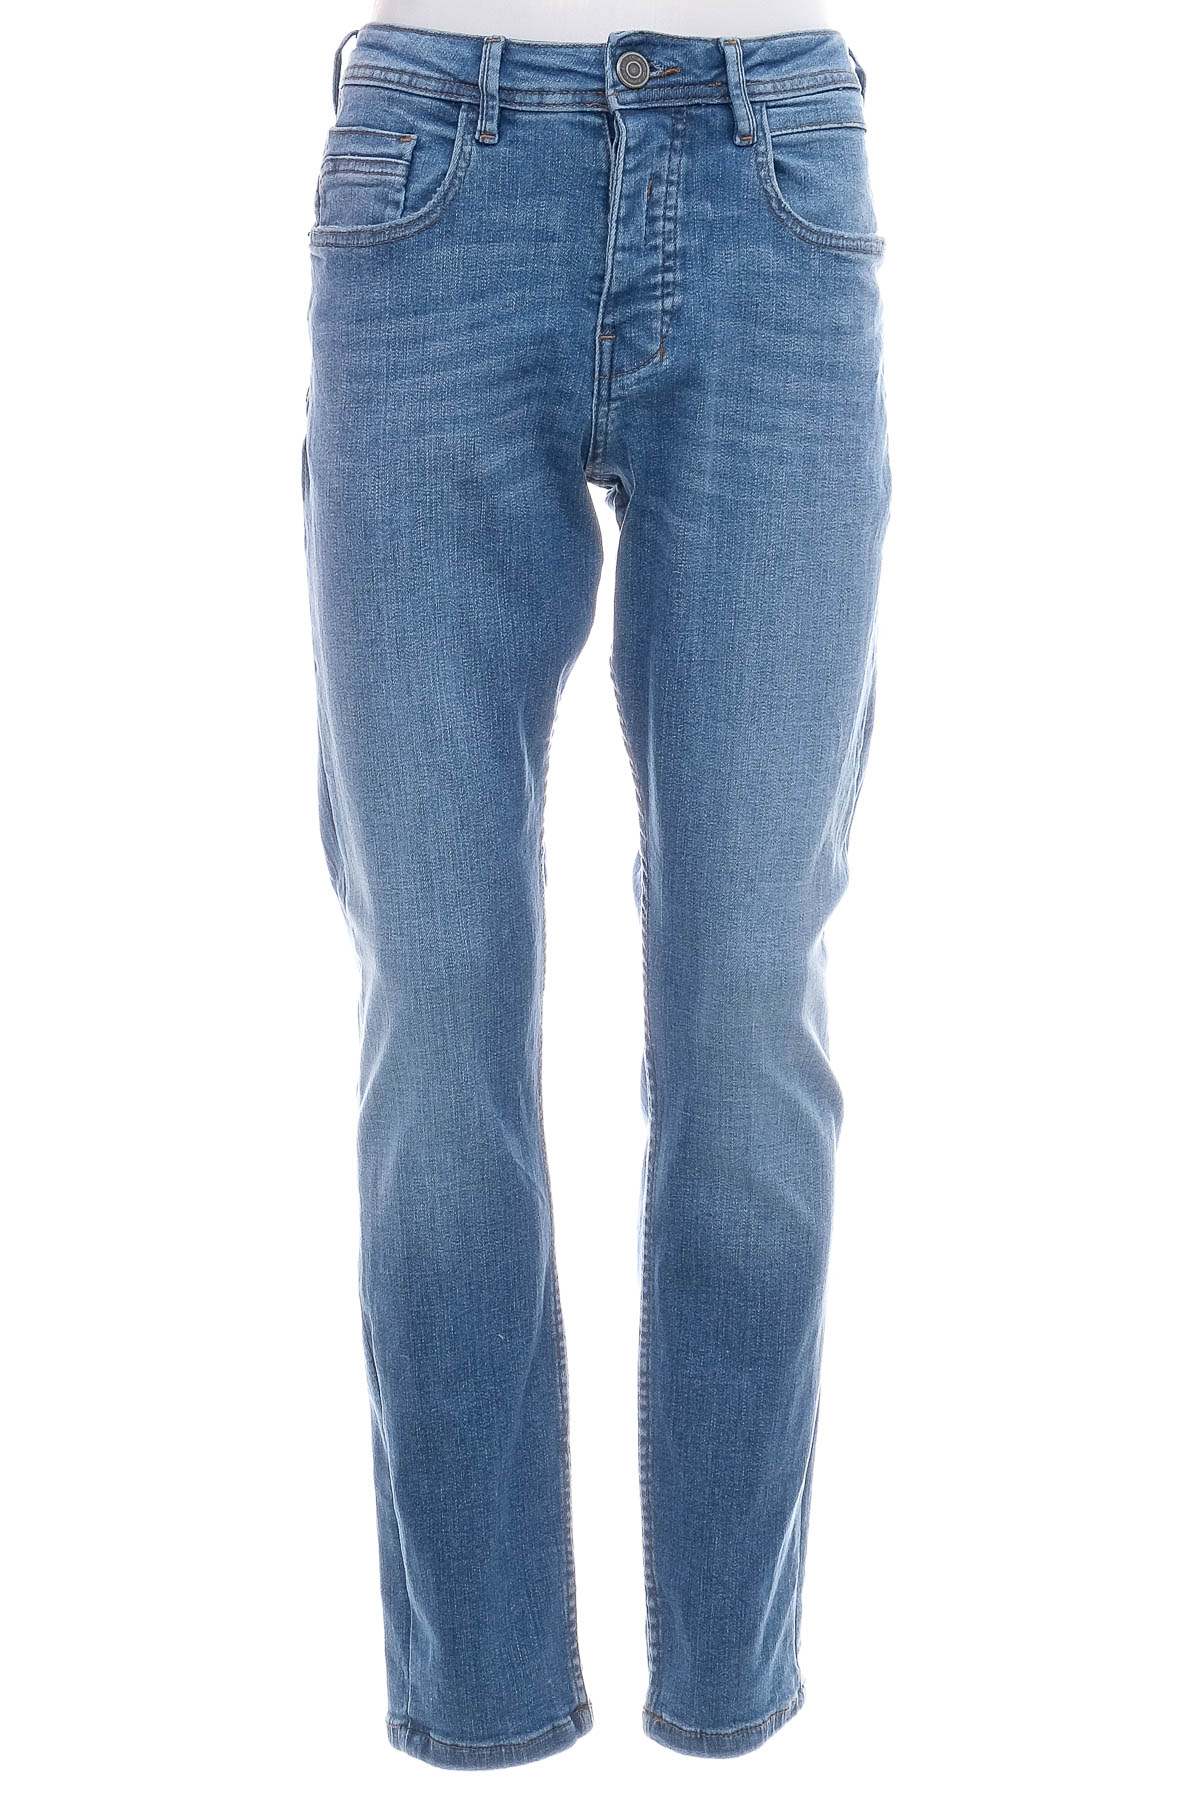 Men's jeans - Denim & Co - 0